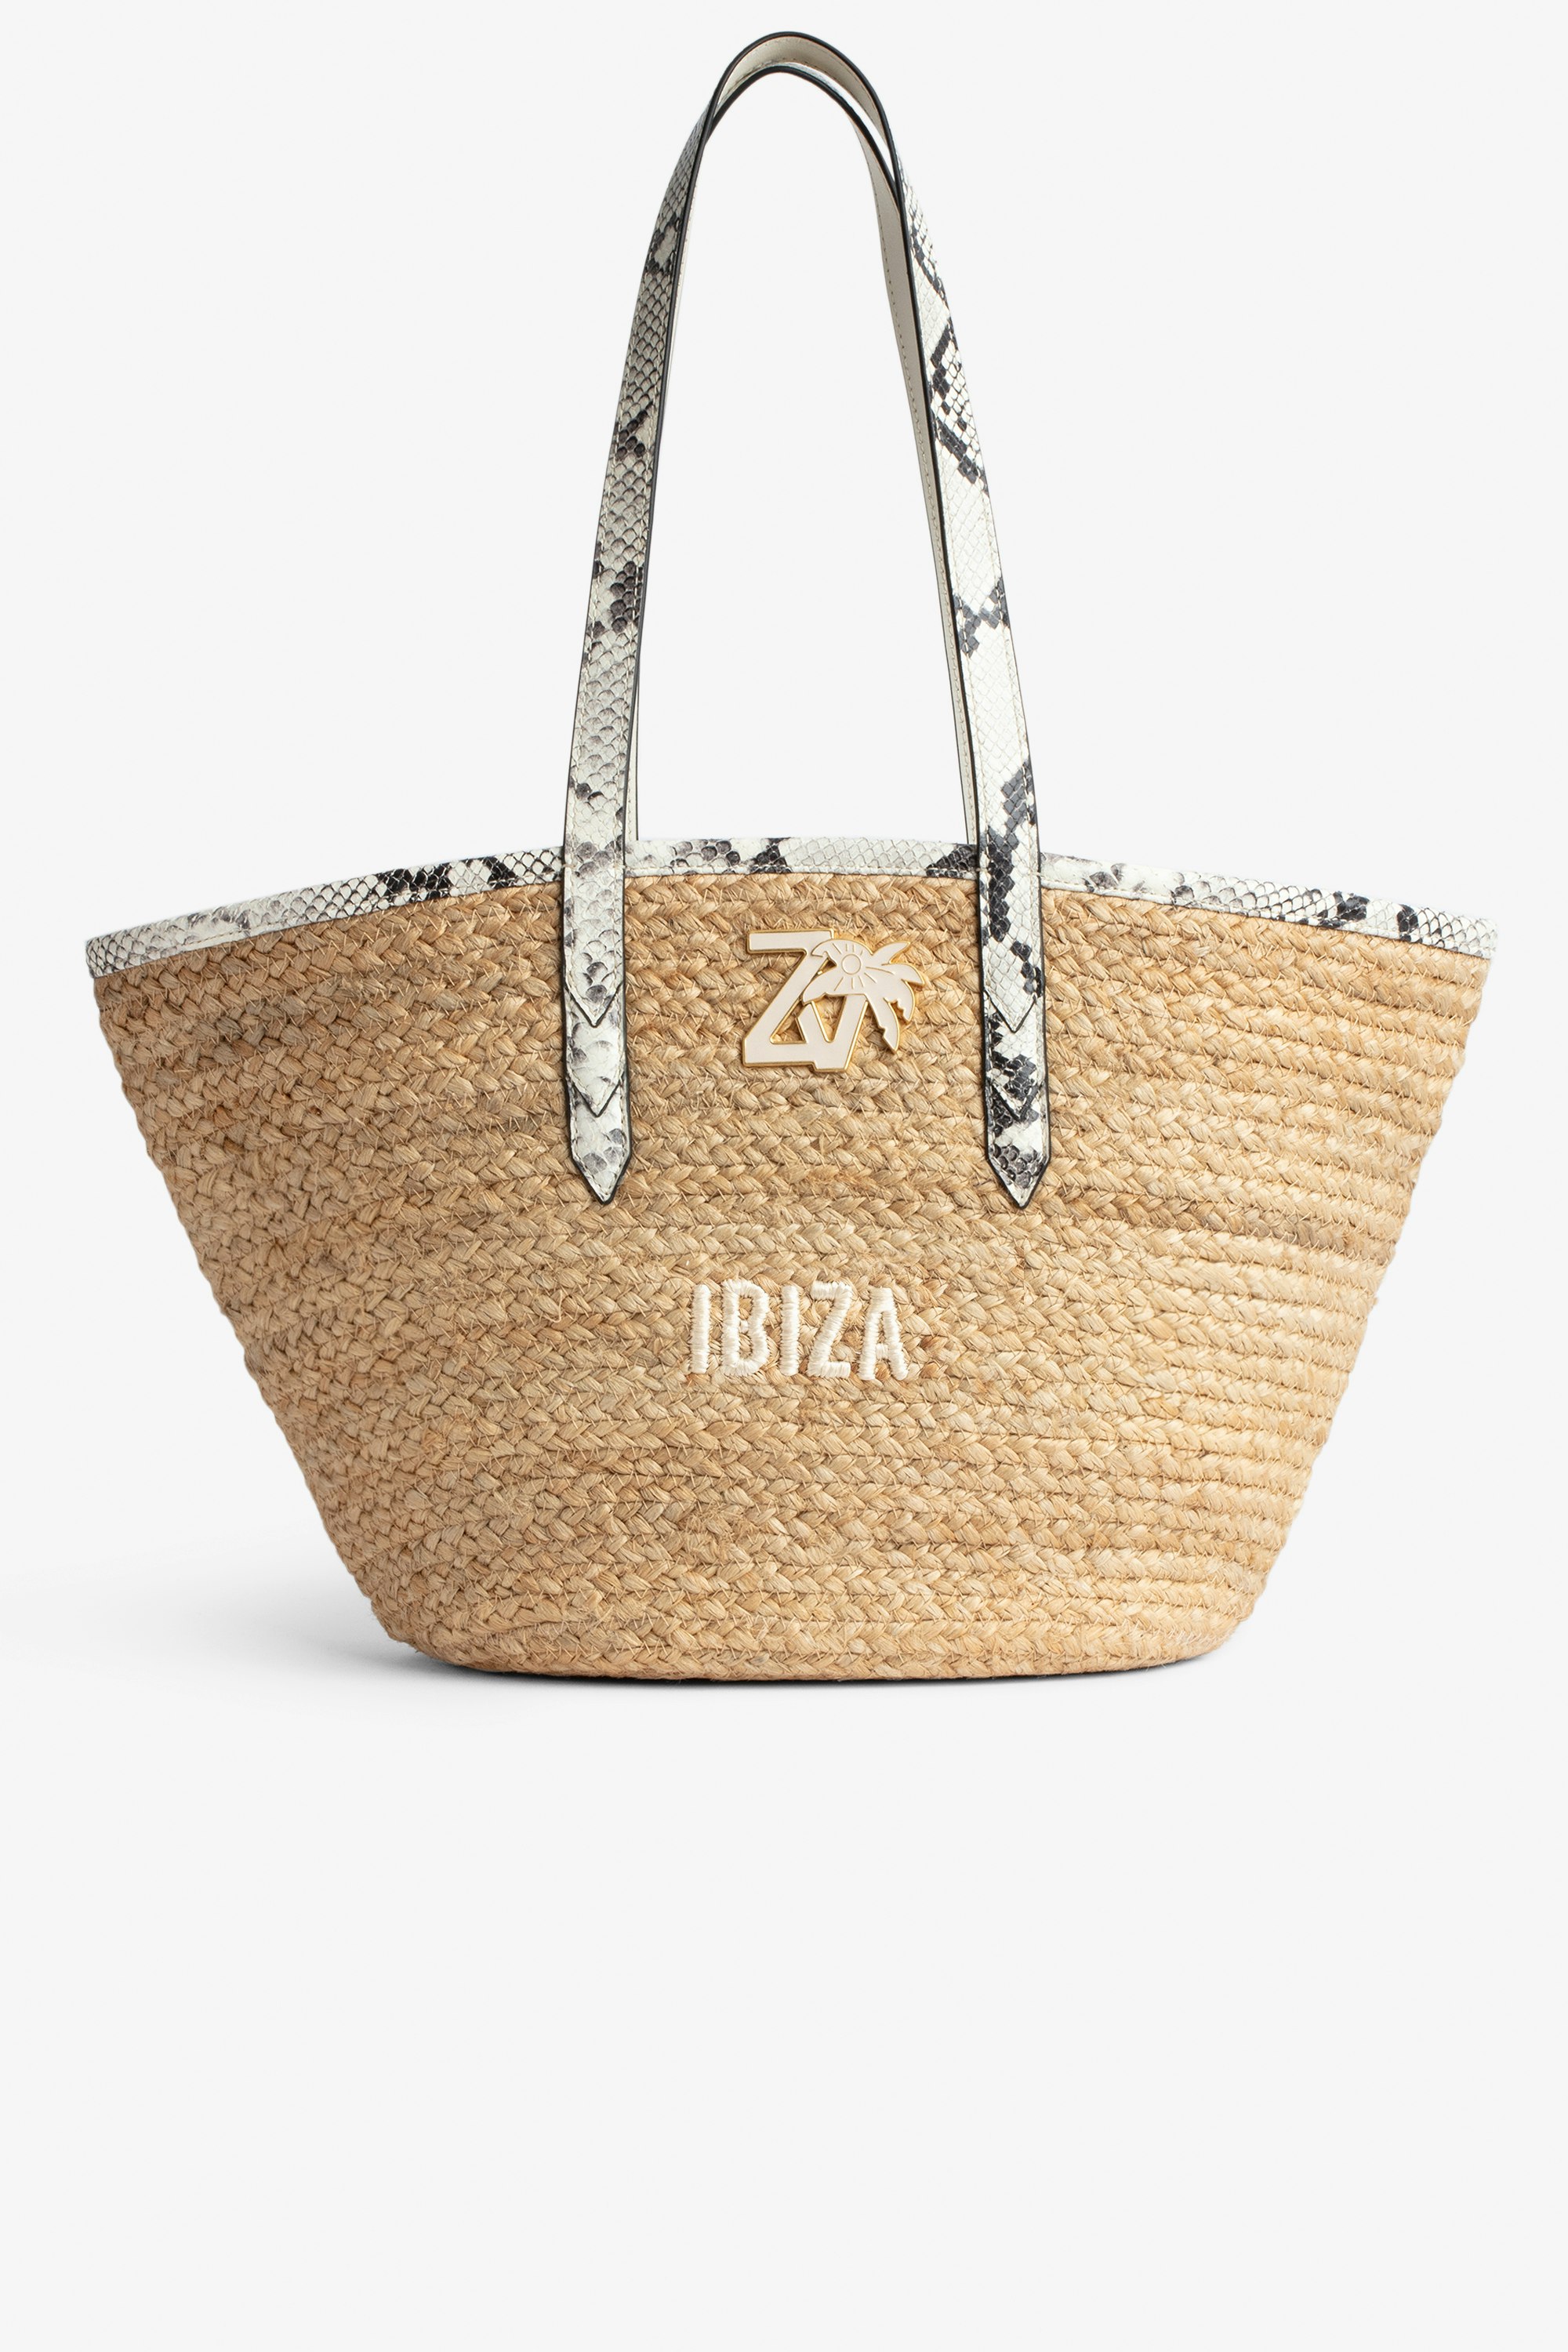 Le Beach Bag パイソンエフェクト エクリュレザーハンドル付きストローバッグ、「Ibiza」の刺繍とZV チャーム付き レディース